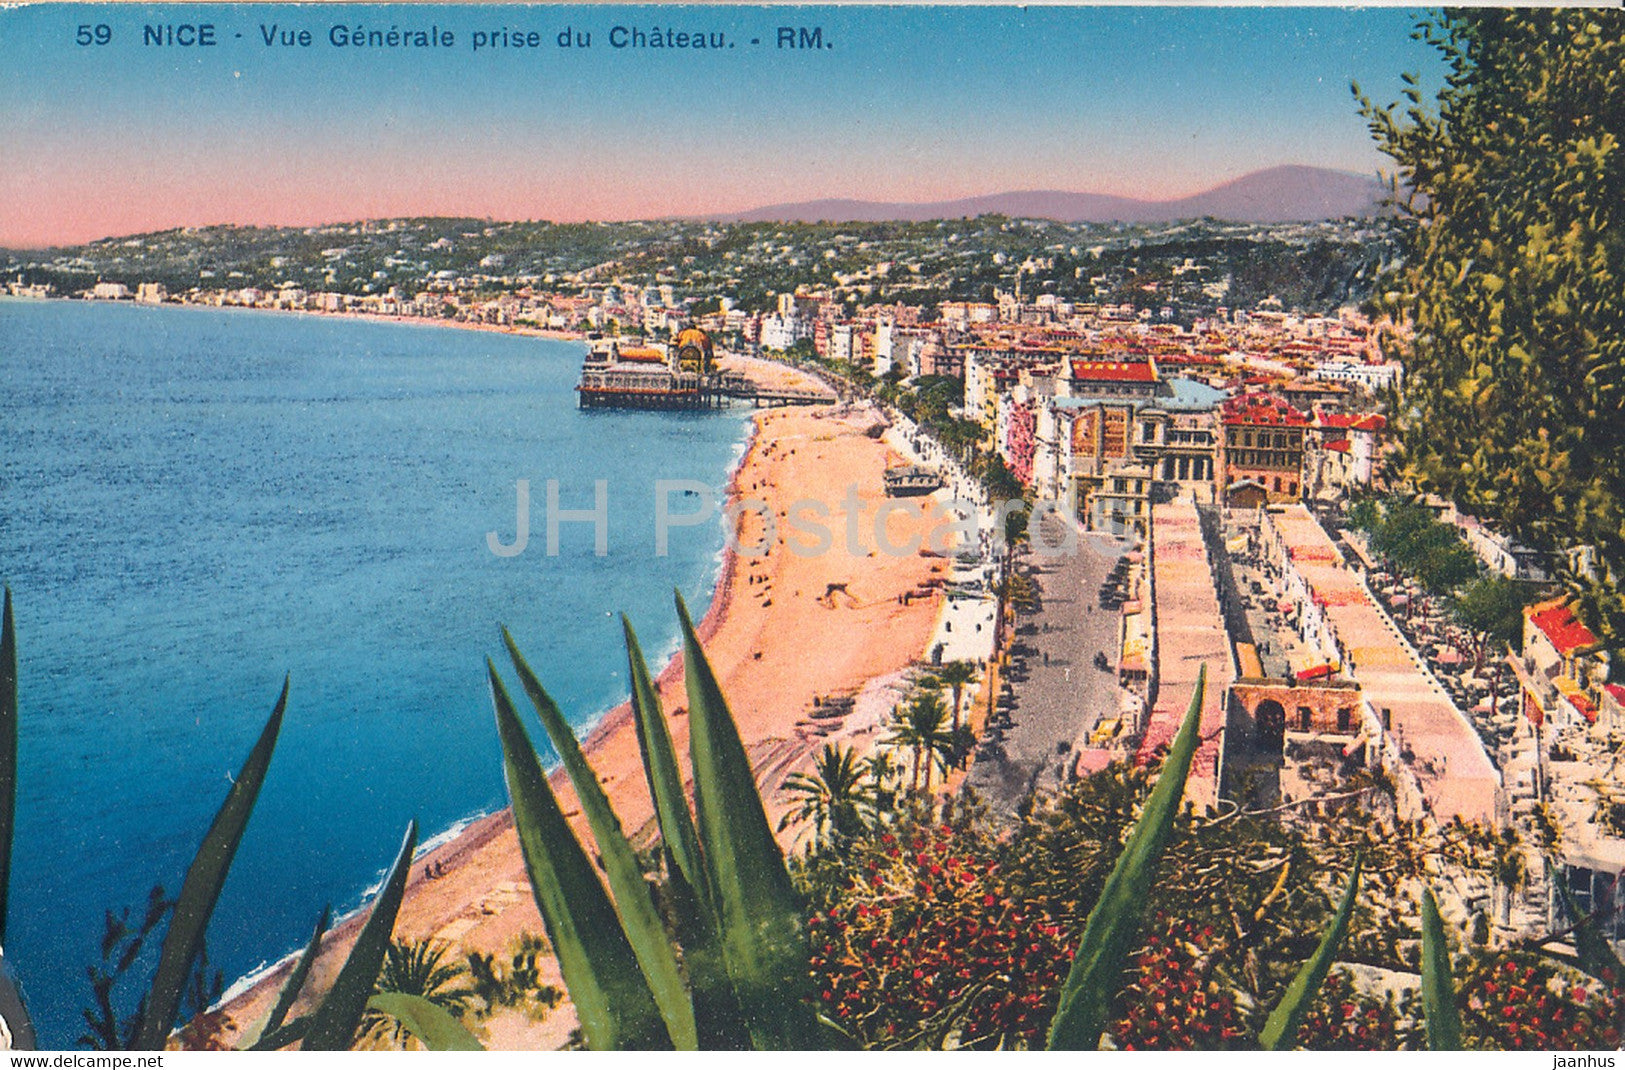 Nice - Vue Generale prise du Chateau - 59 - old postcard - France - unused - JH Postcards